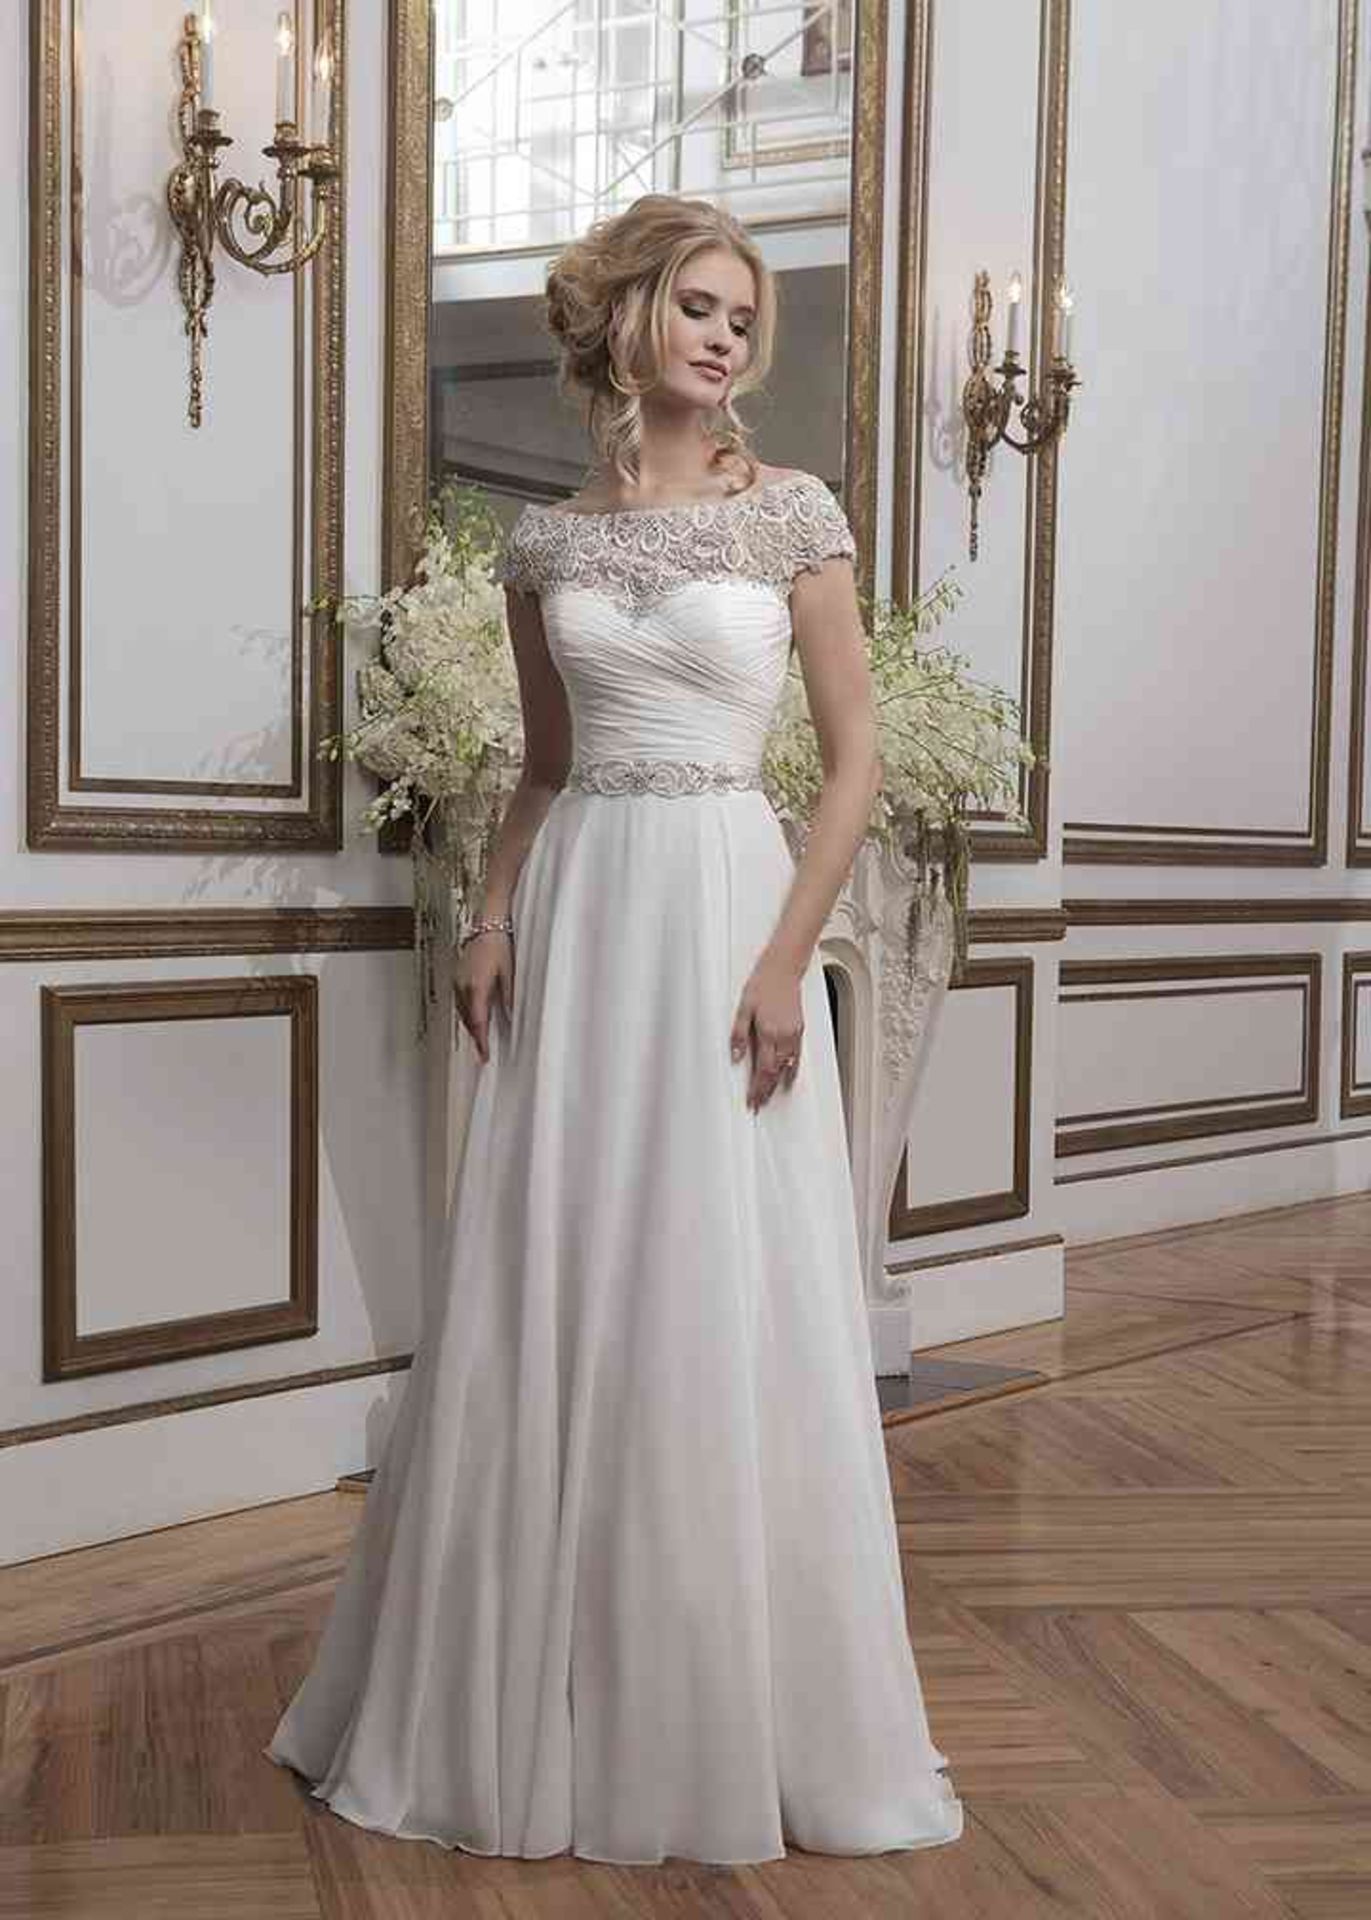 1 x Justin Alexander 'Aphrodite' Chiffon Bridal Gown - UK Size 16 - RRP £1,415 - Image 15 of 23